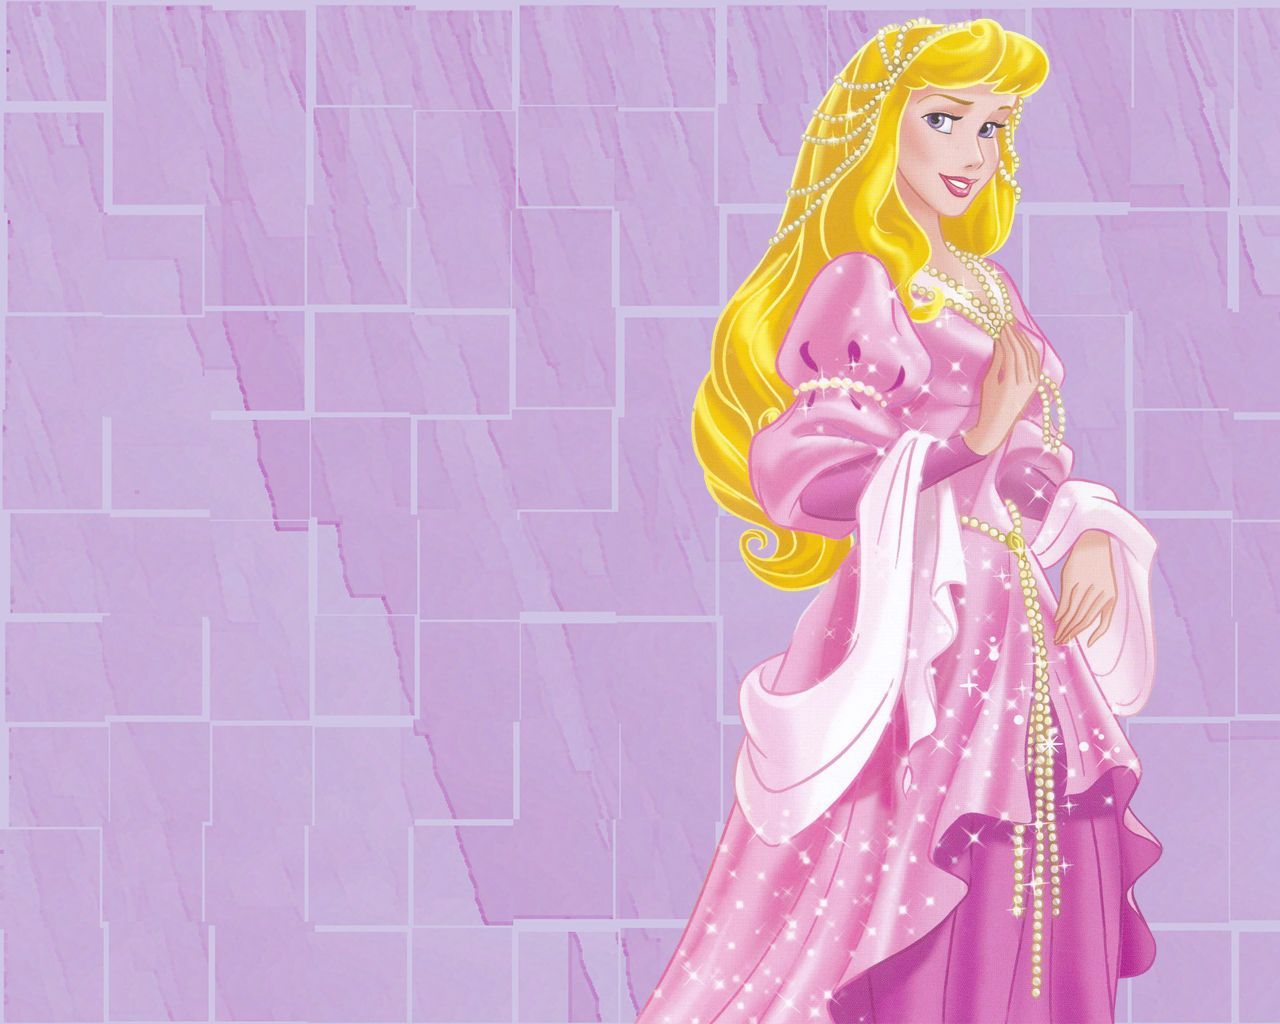 Disney Princess Wallpaper: Princess Aurora. Disney princess wallpaper, Princess aurora, Alternative disney princesses